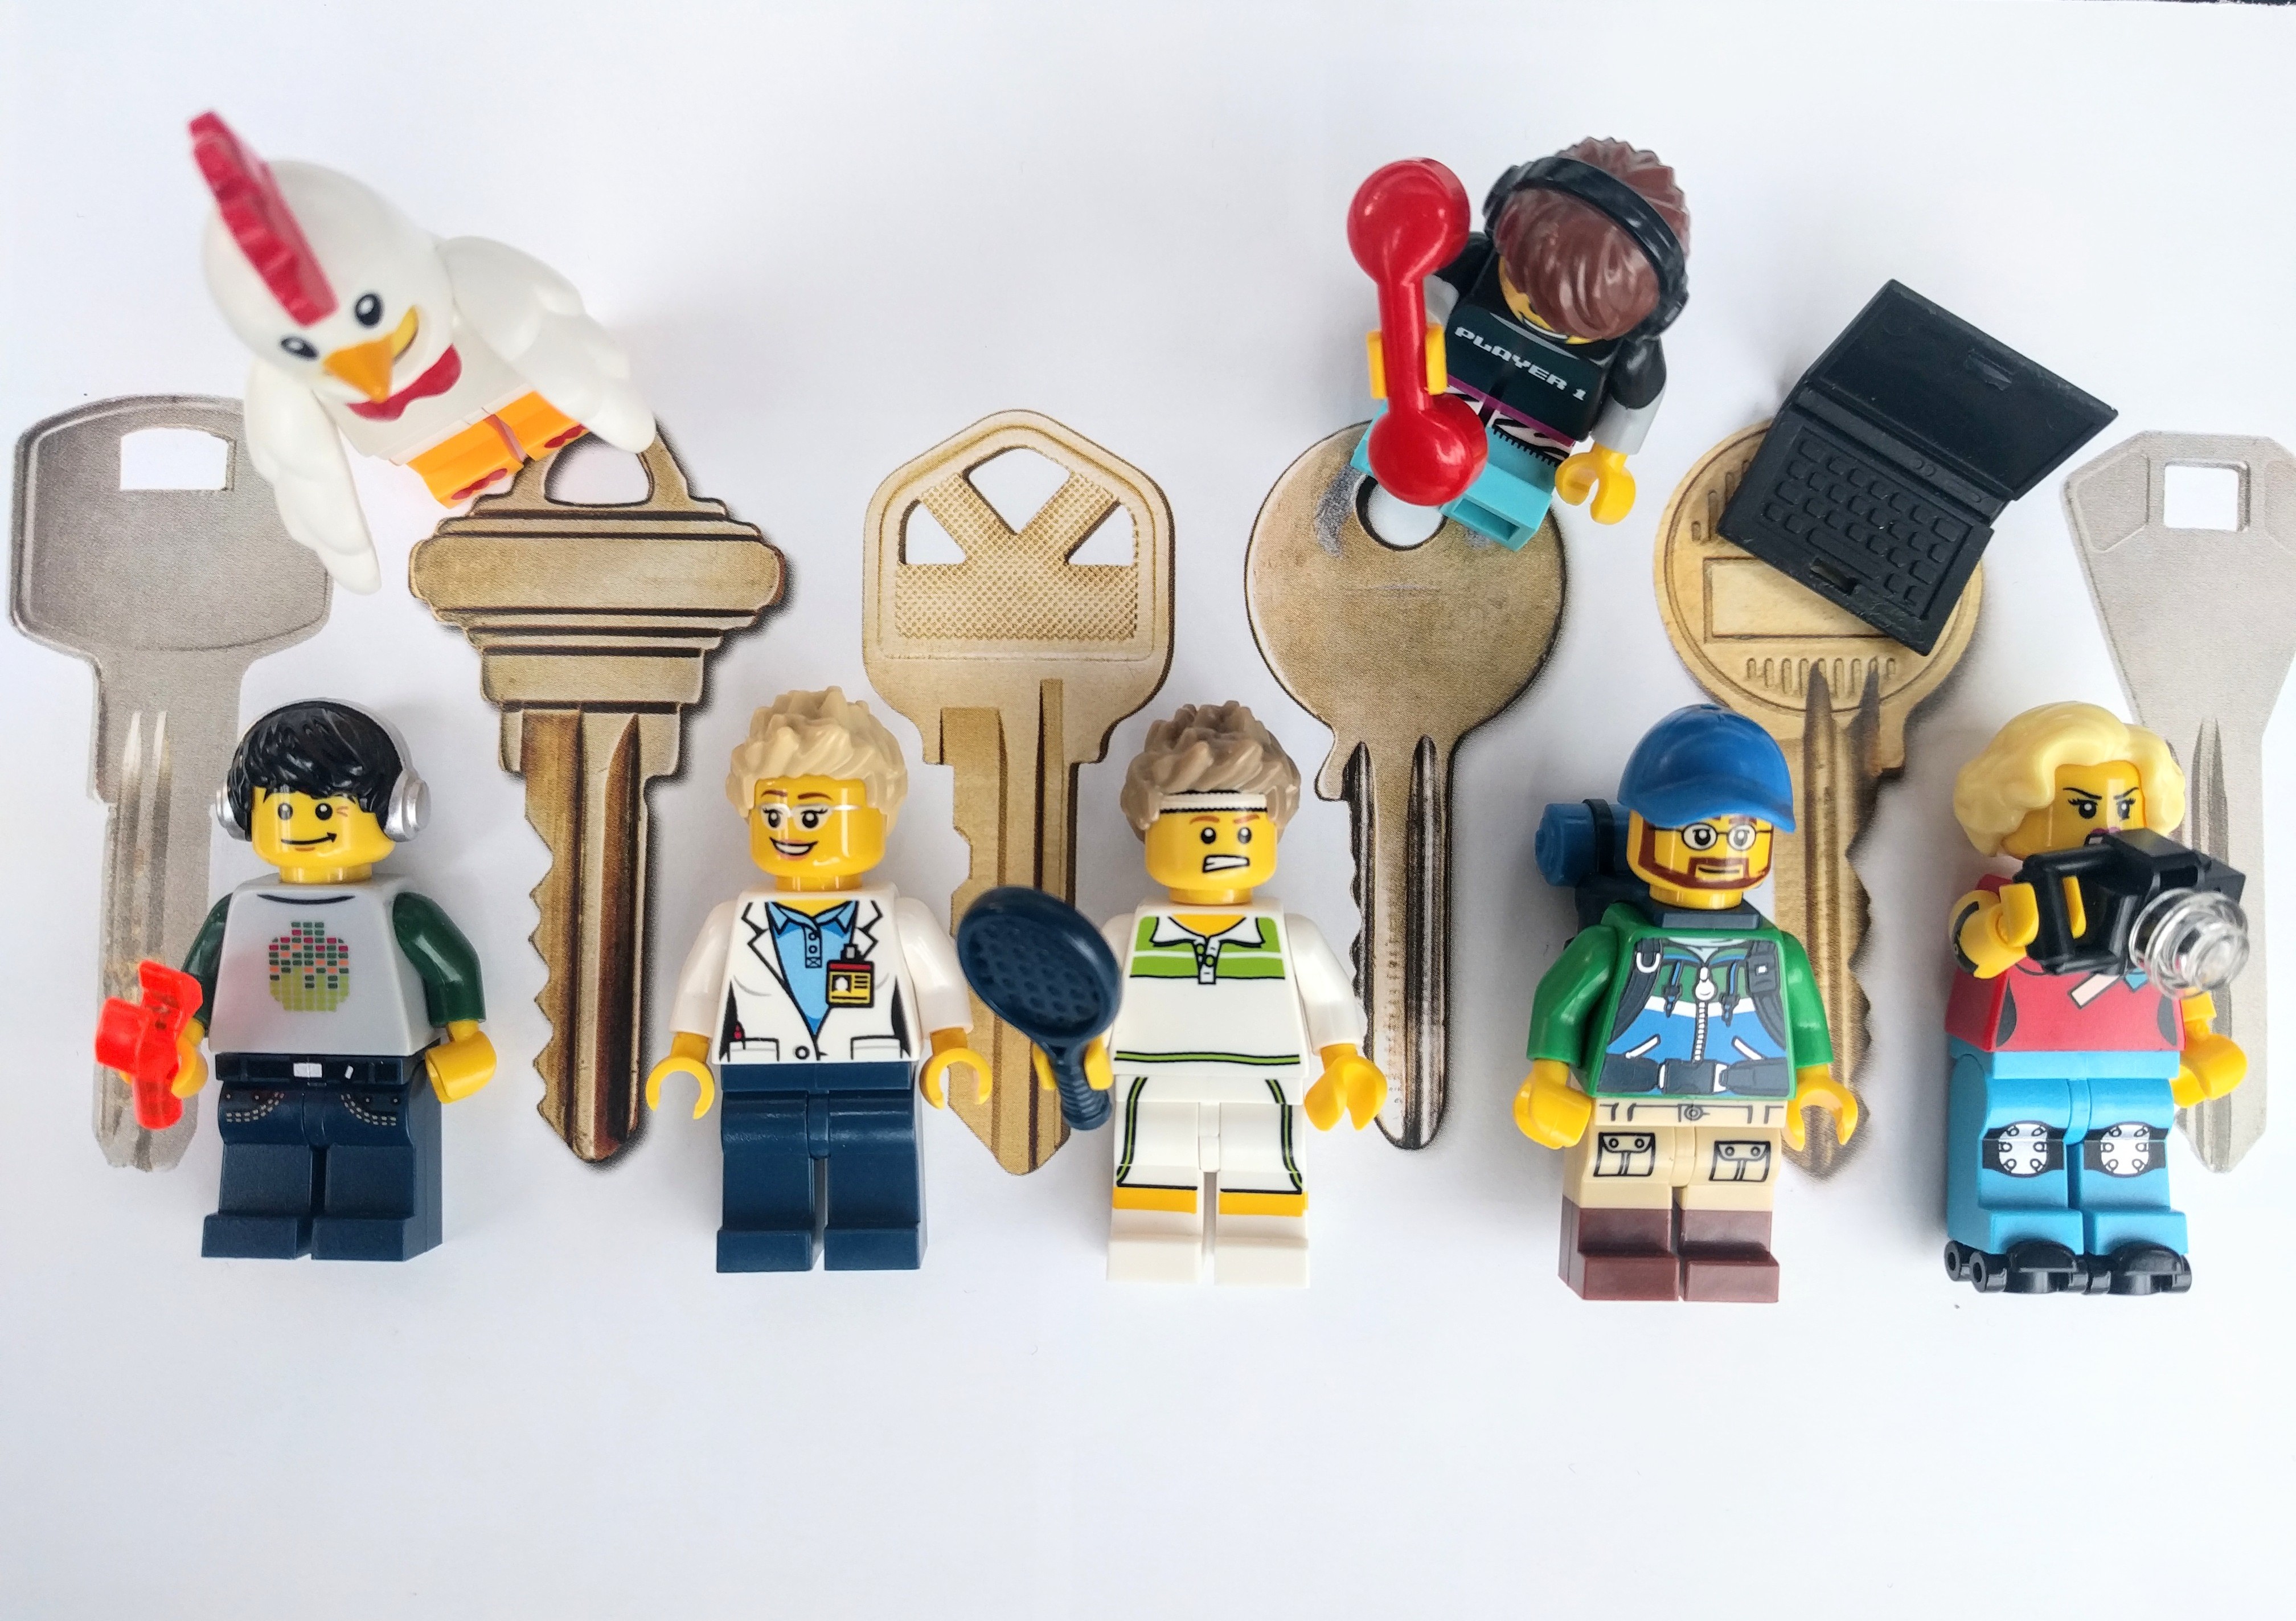 lego figures lying down with keys